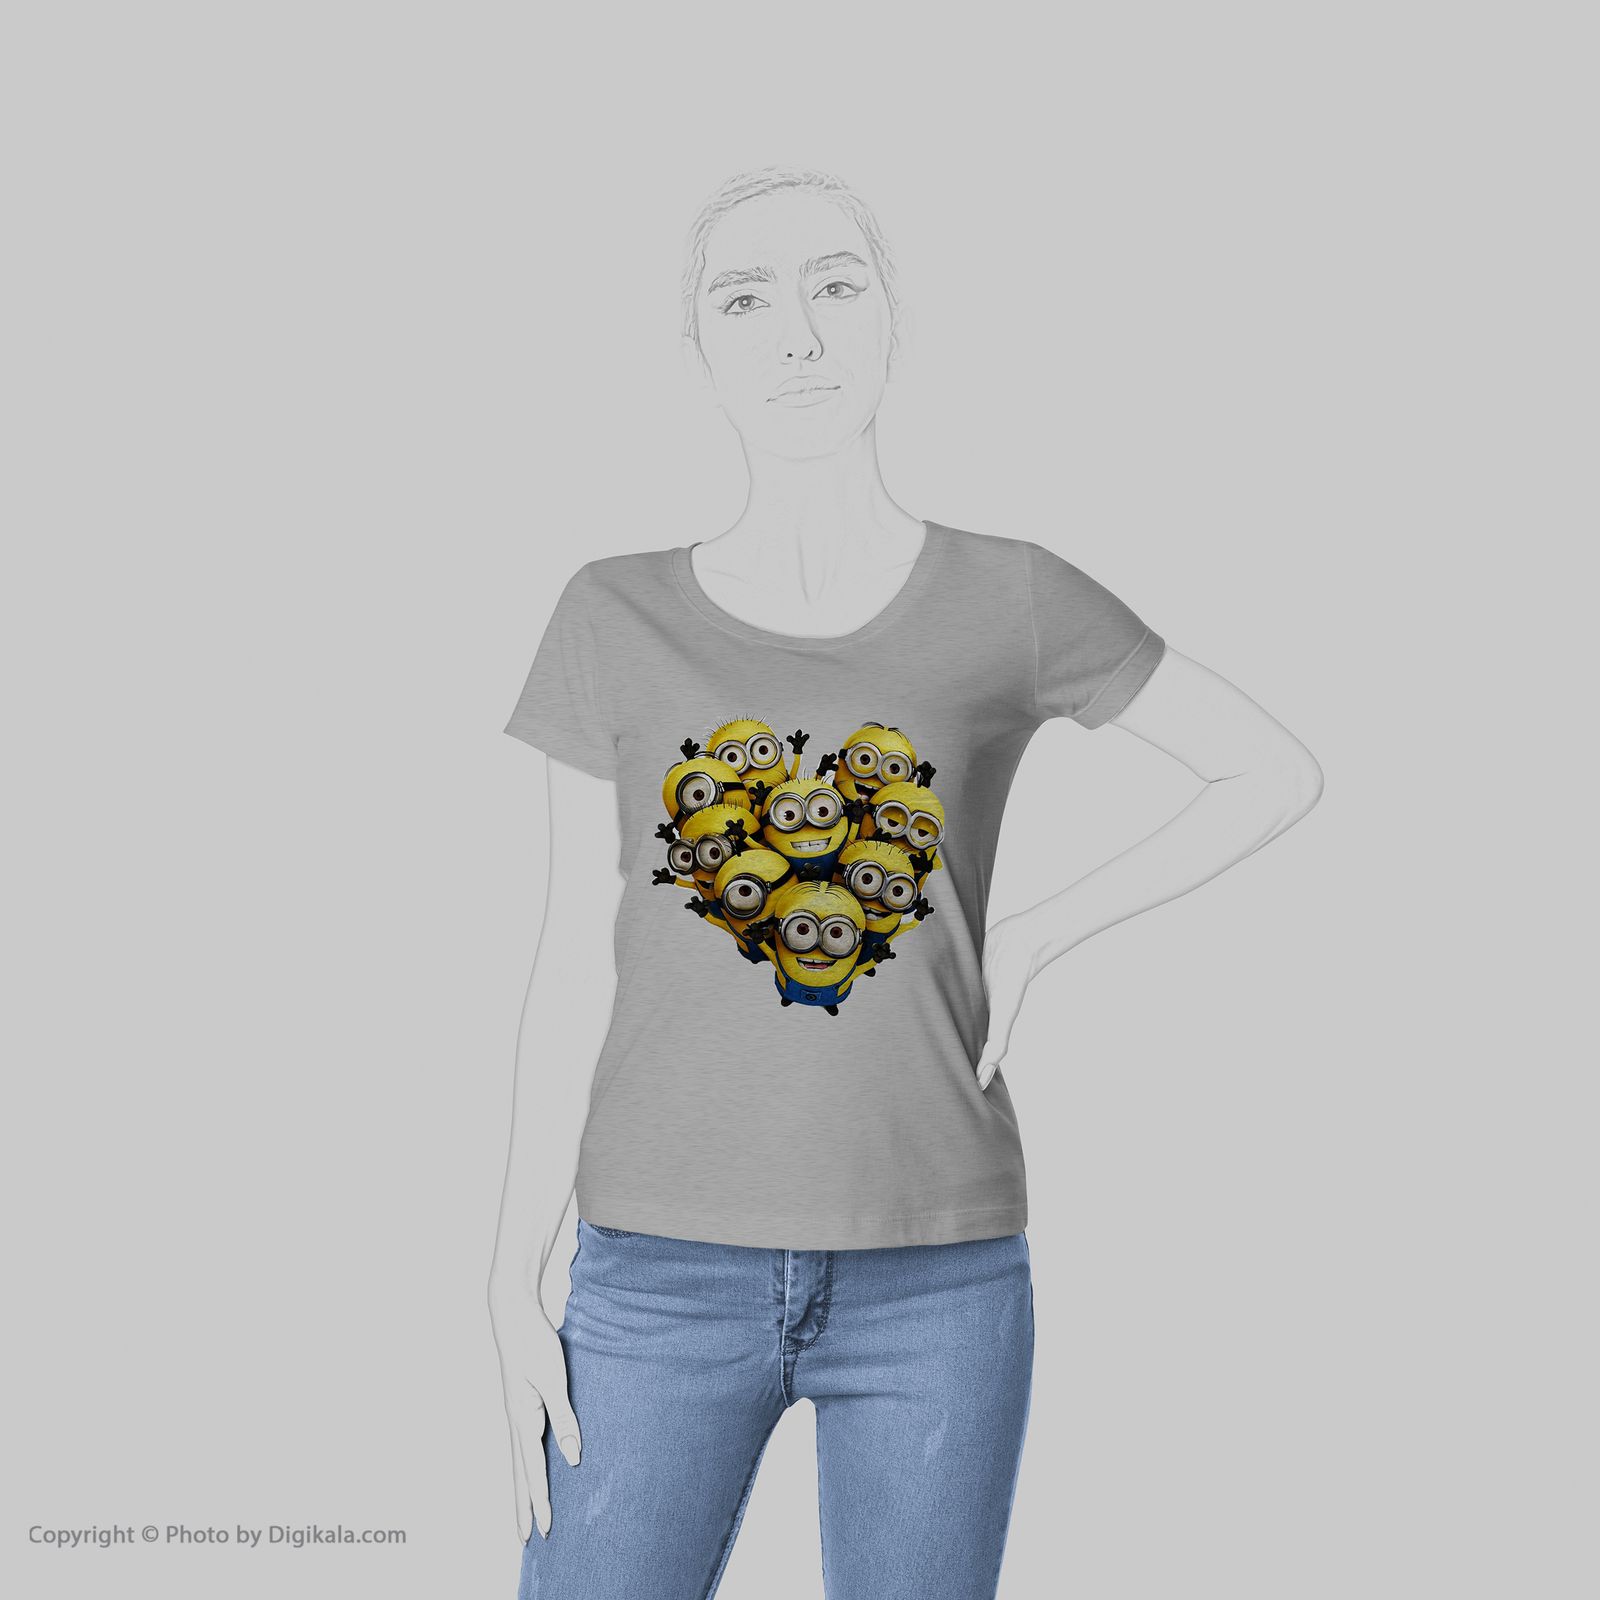 تی شرت زنانه به رسم طرح مینیون قلب کد 449 -  - 6